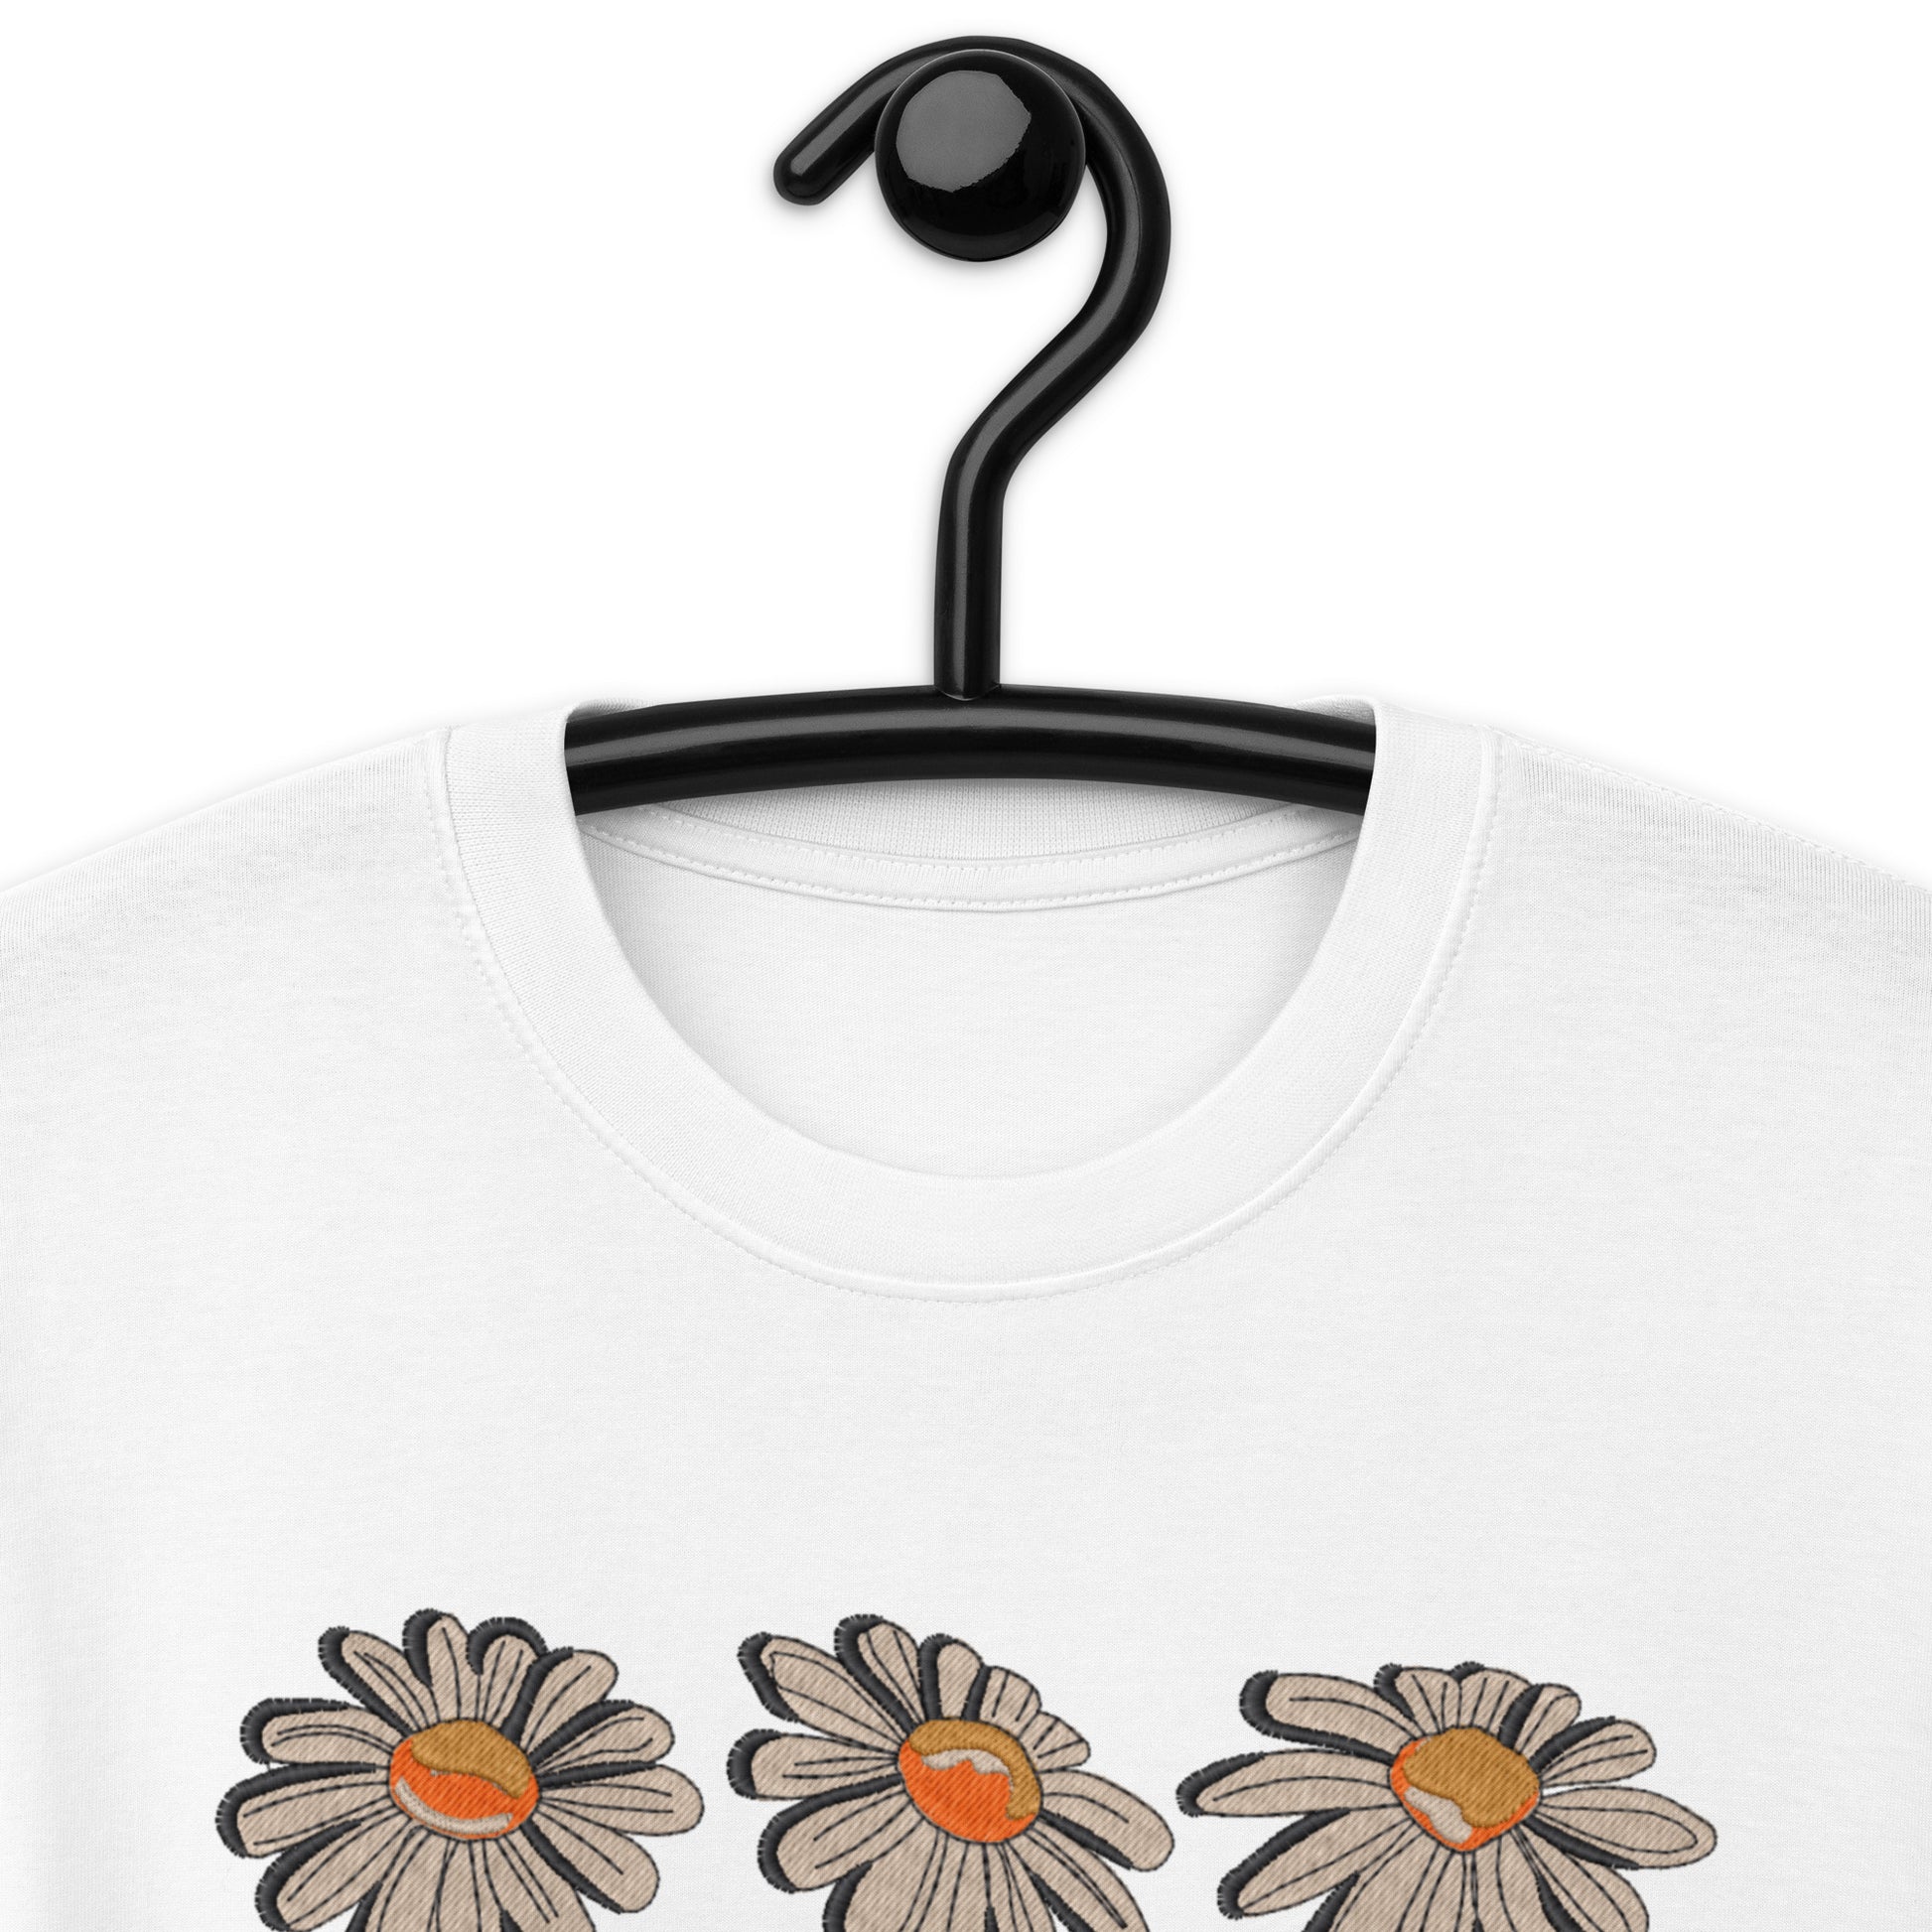 Daisy Flowers GILDAN T-Shirt - Magandato